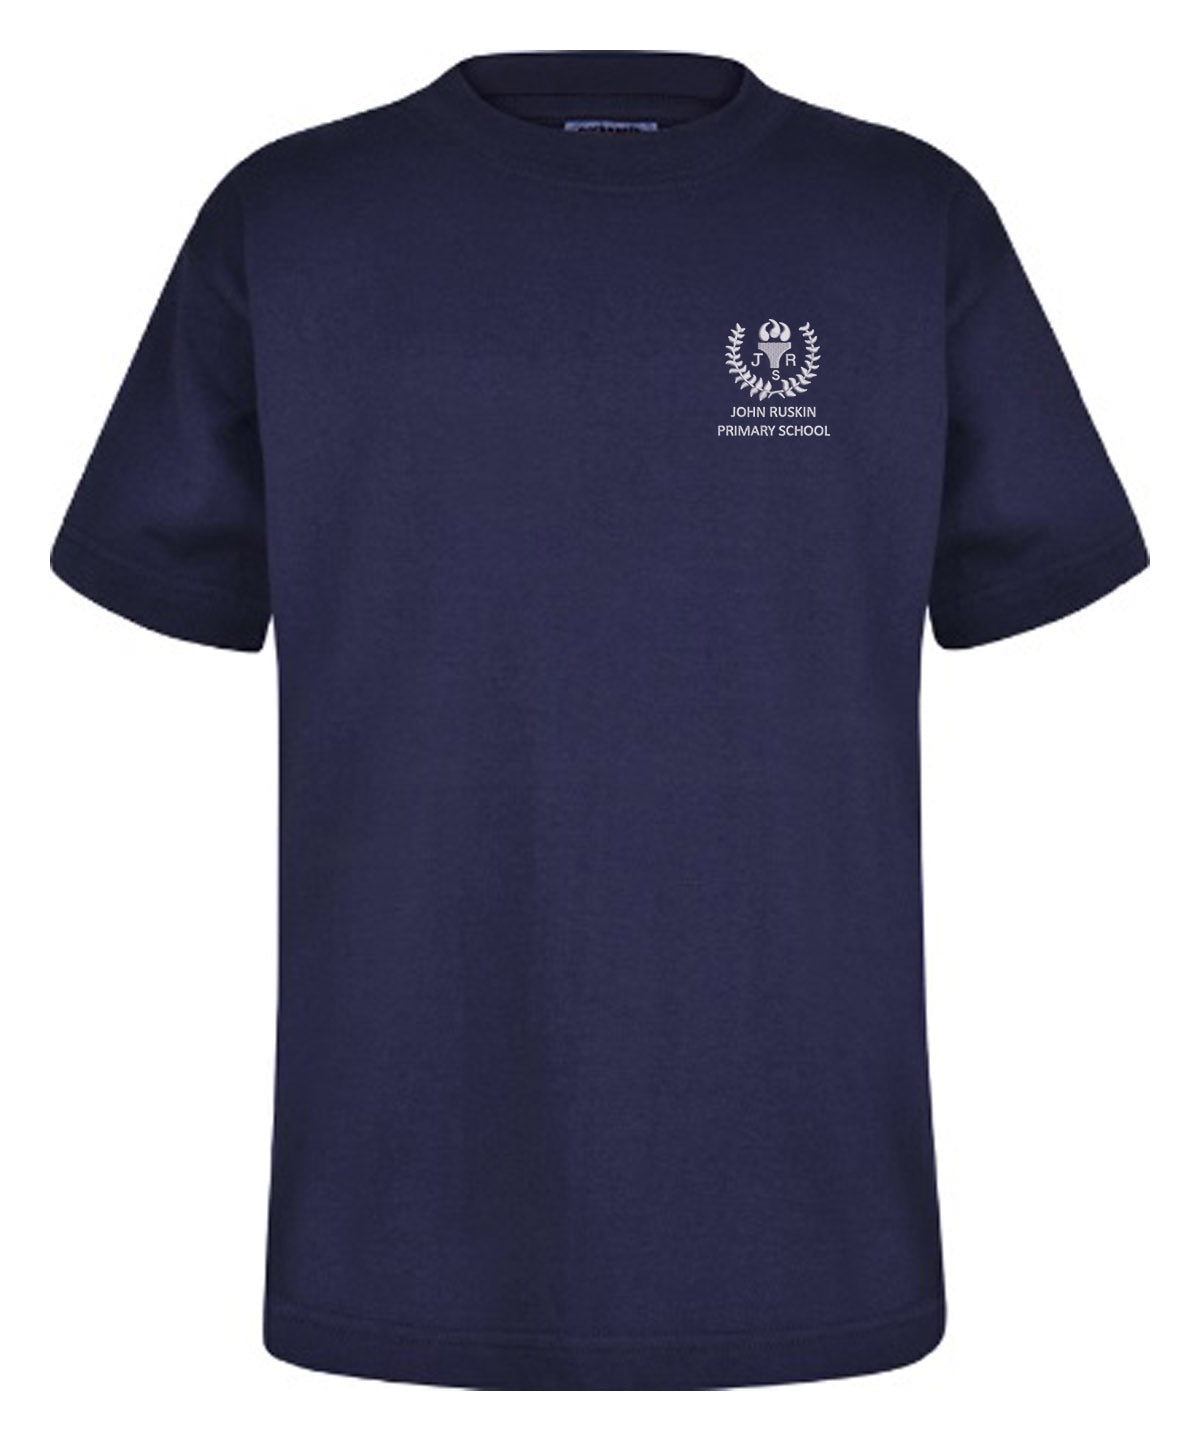 John Ruskin Primary Schol - Unisex Cotton T-Shirt - Navy